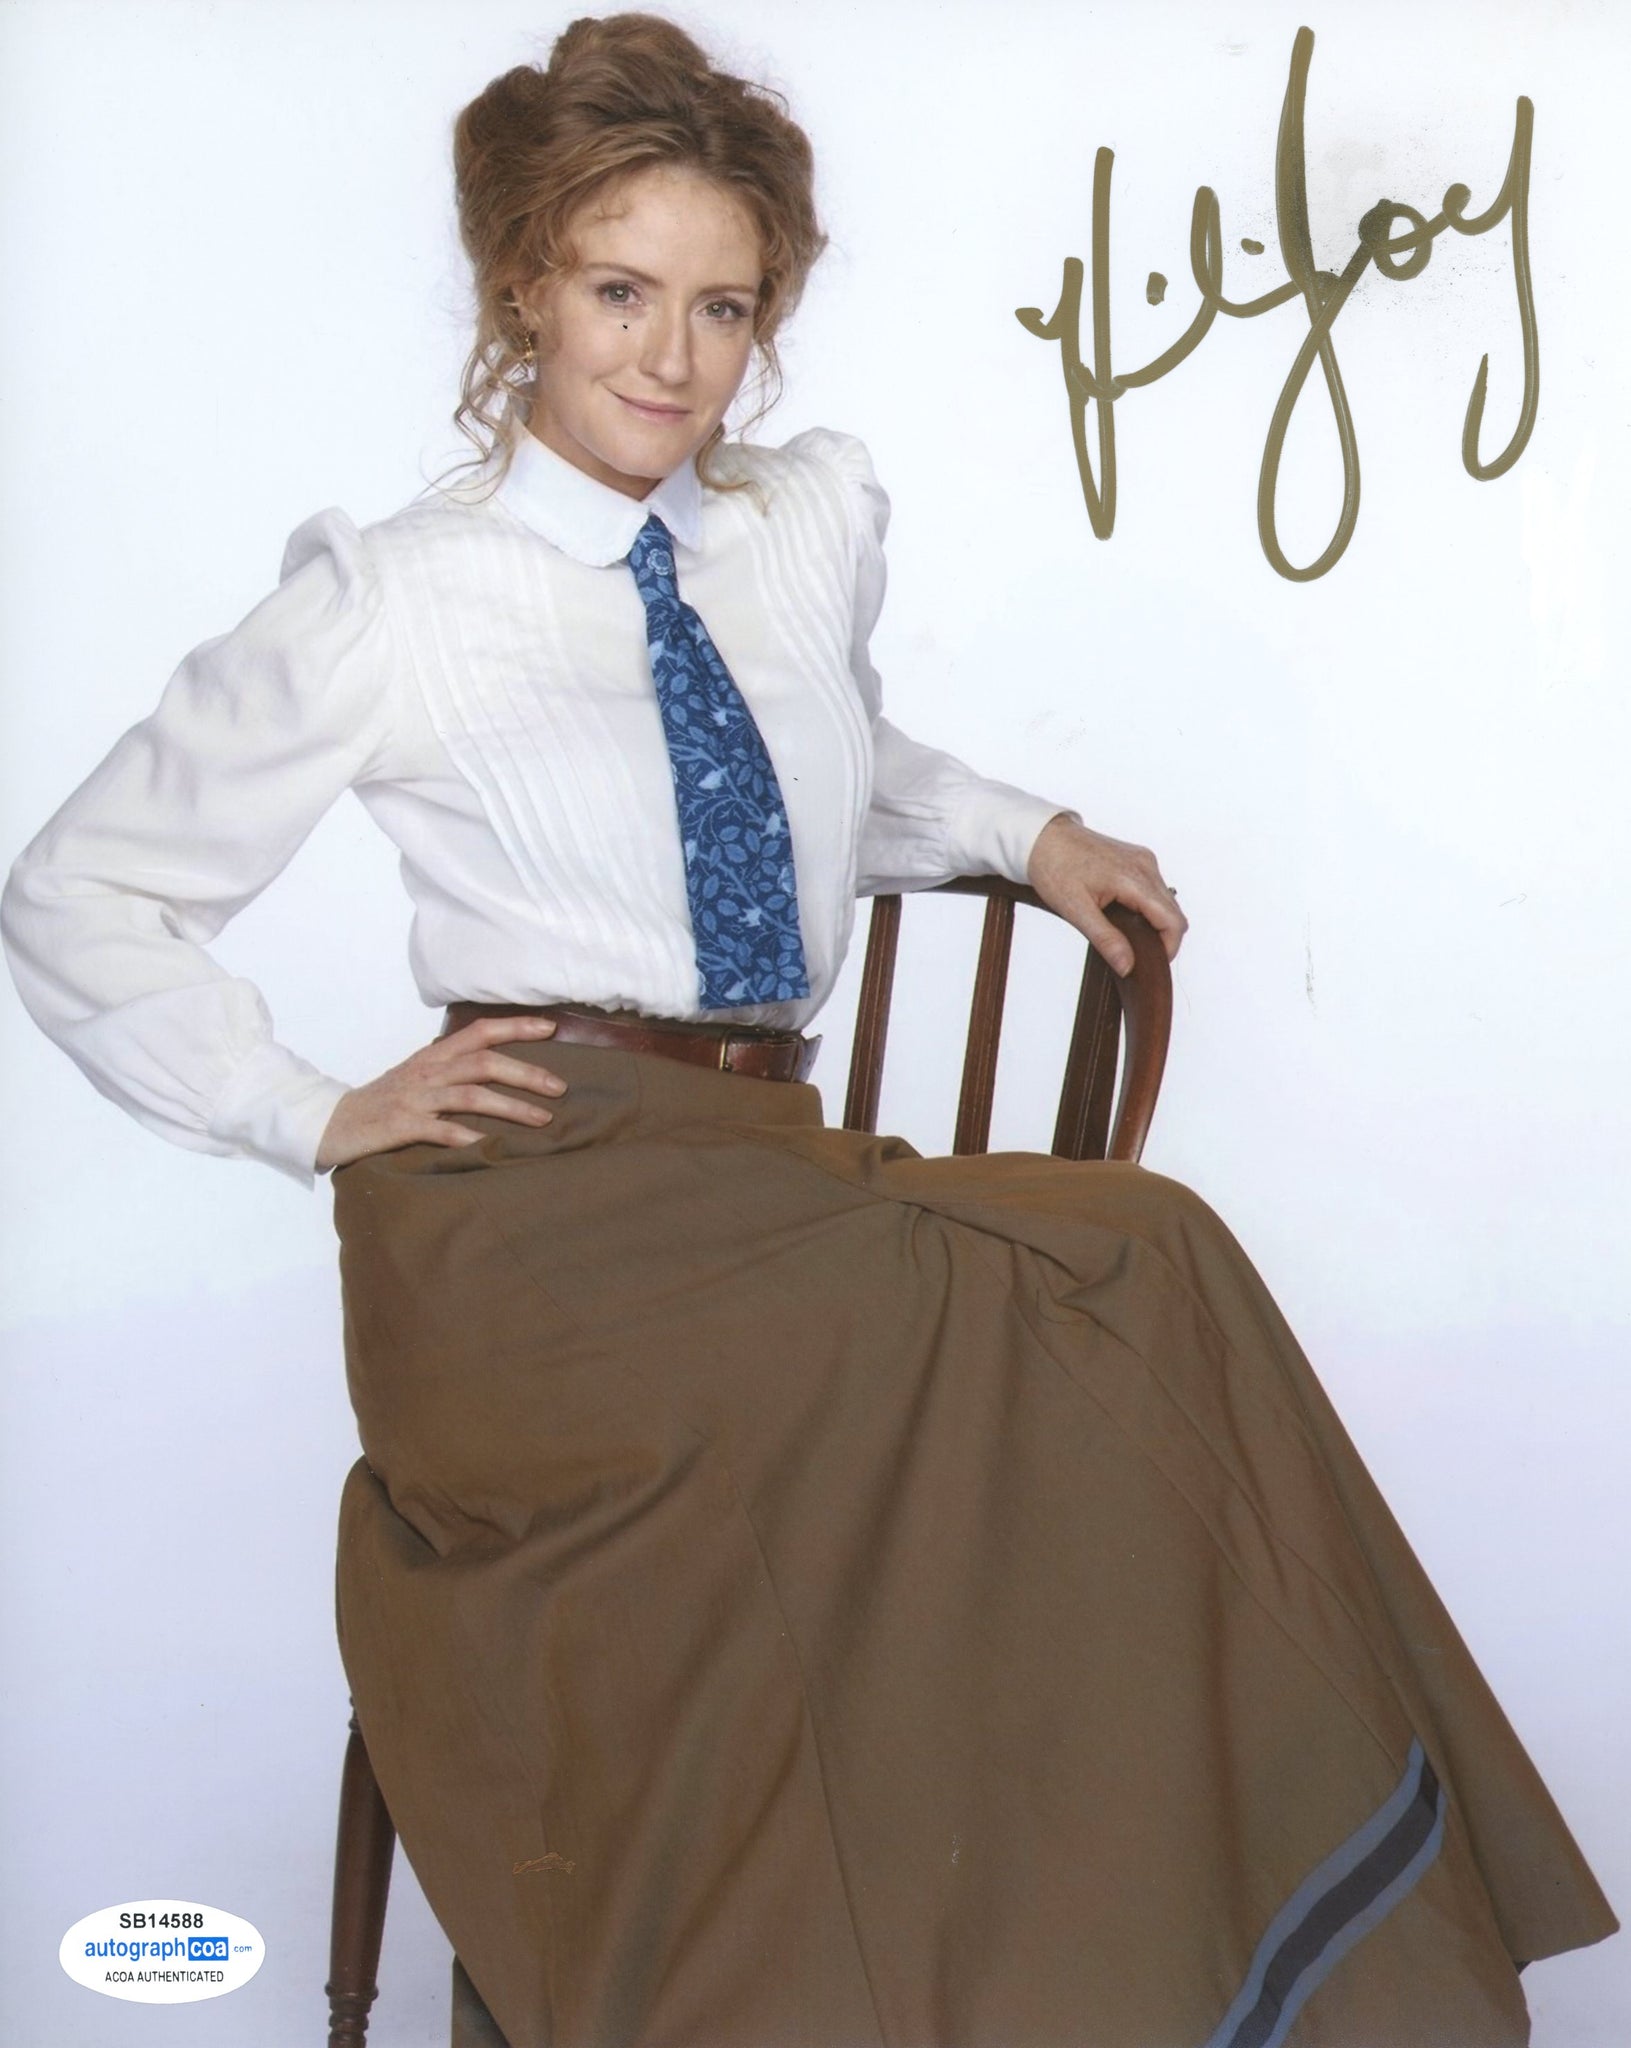 Helene Joy Murdoch Mysteries Signed Autograph 8x10 Photo ACOA